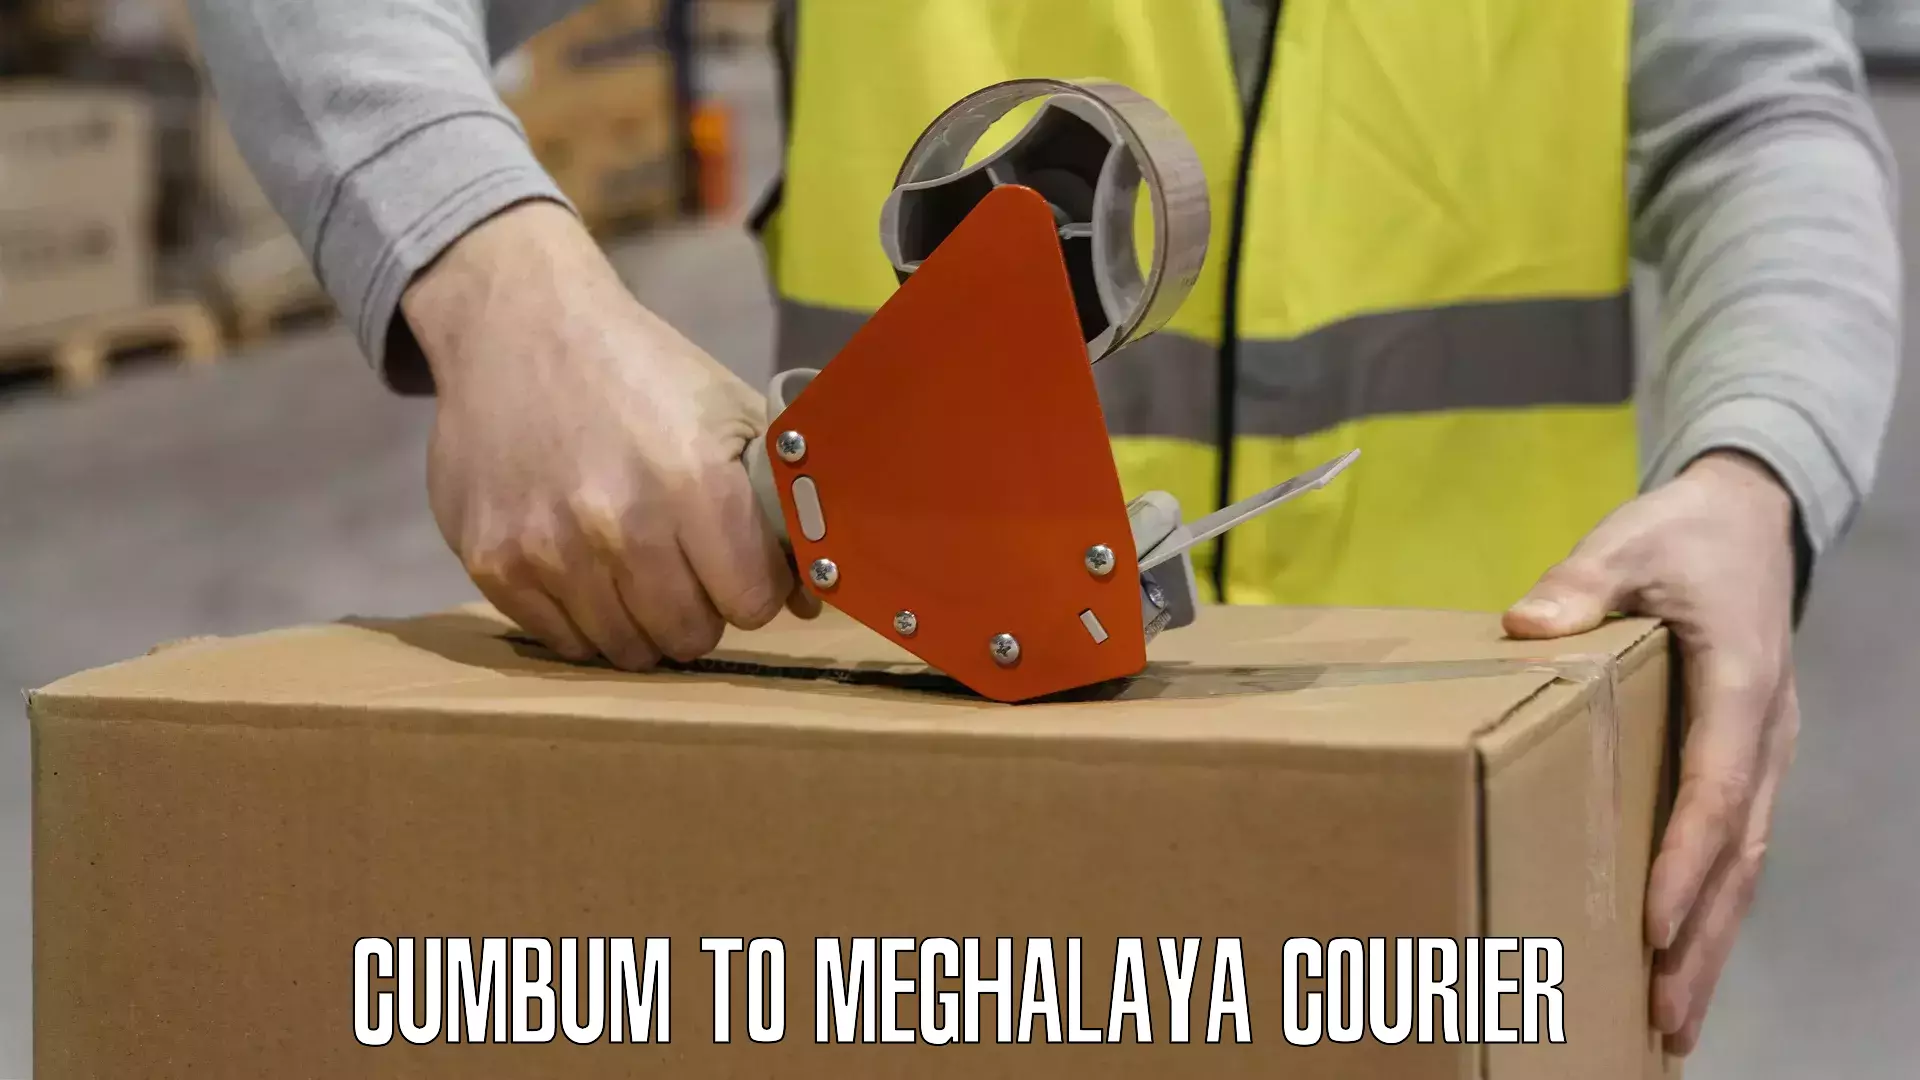 Urgent courier needs Cumbum to Meghalaya